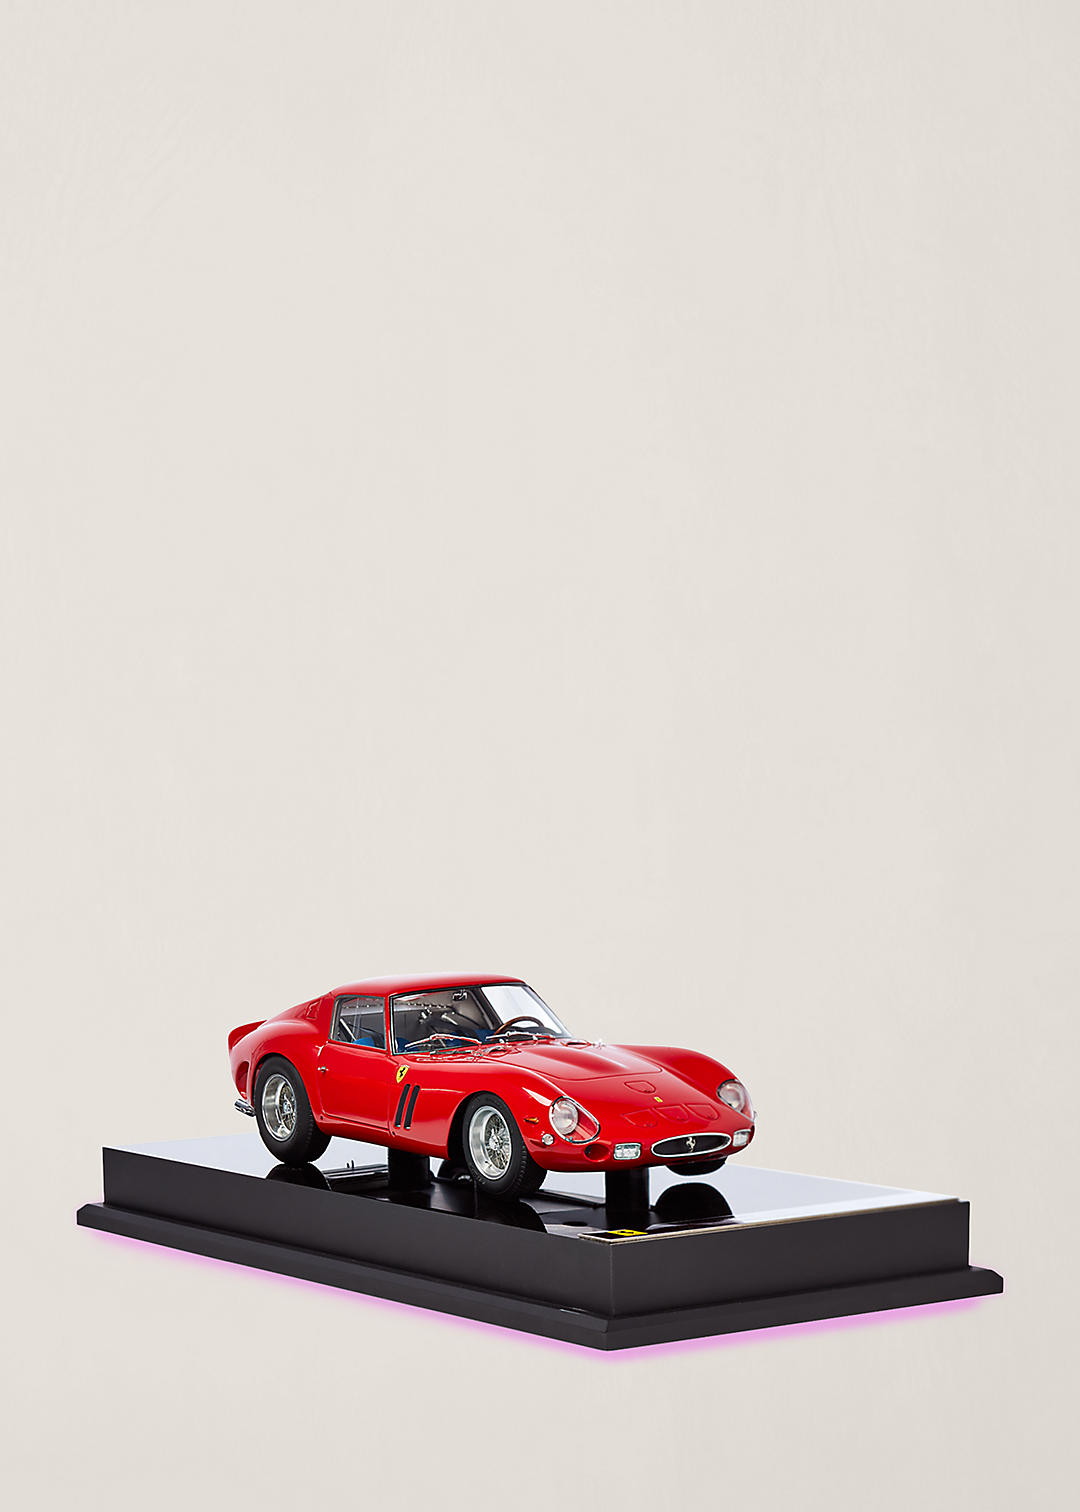 Ralph Lauren Home Ferrari 250 GTO 1